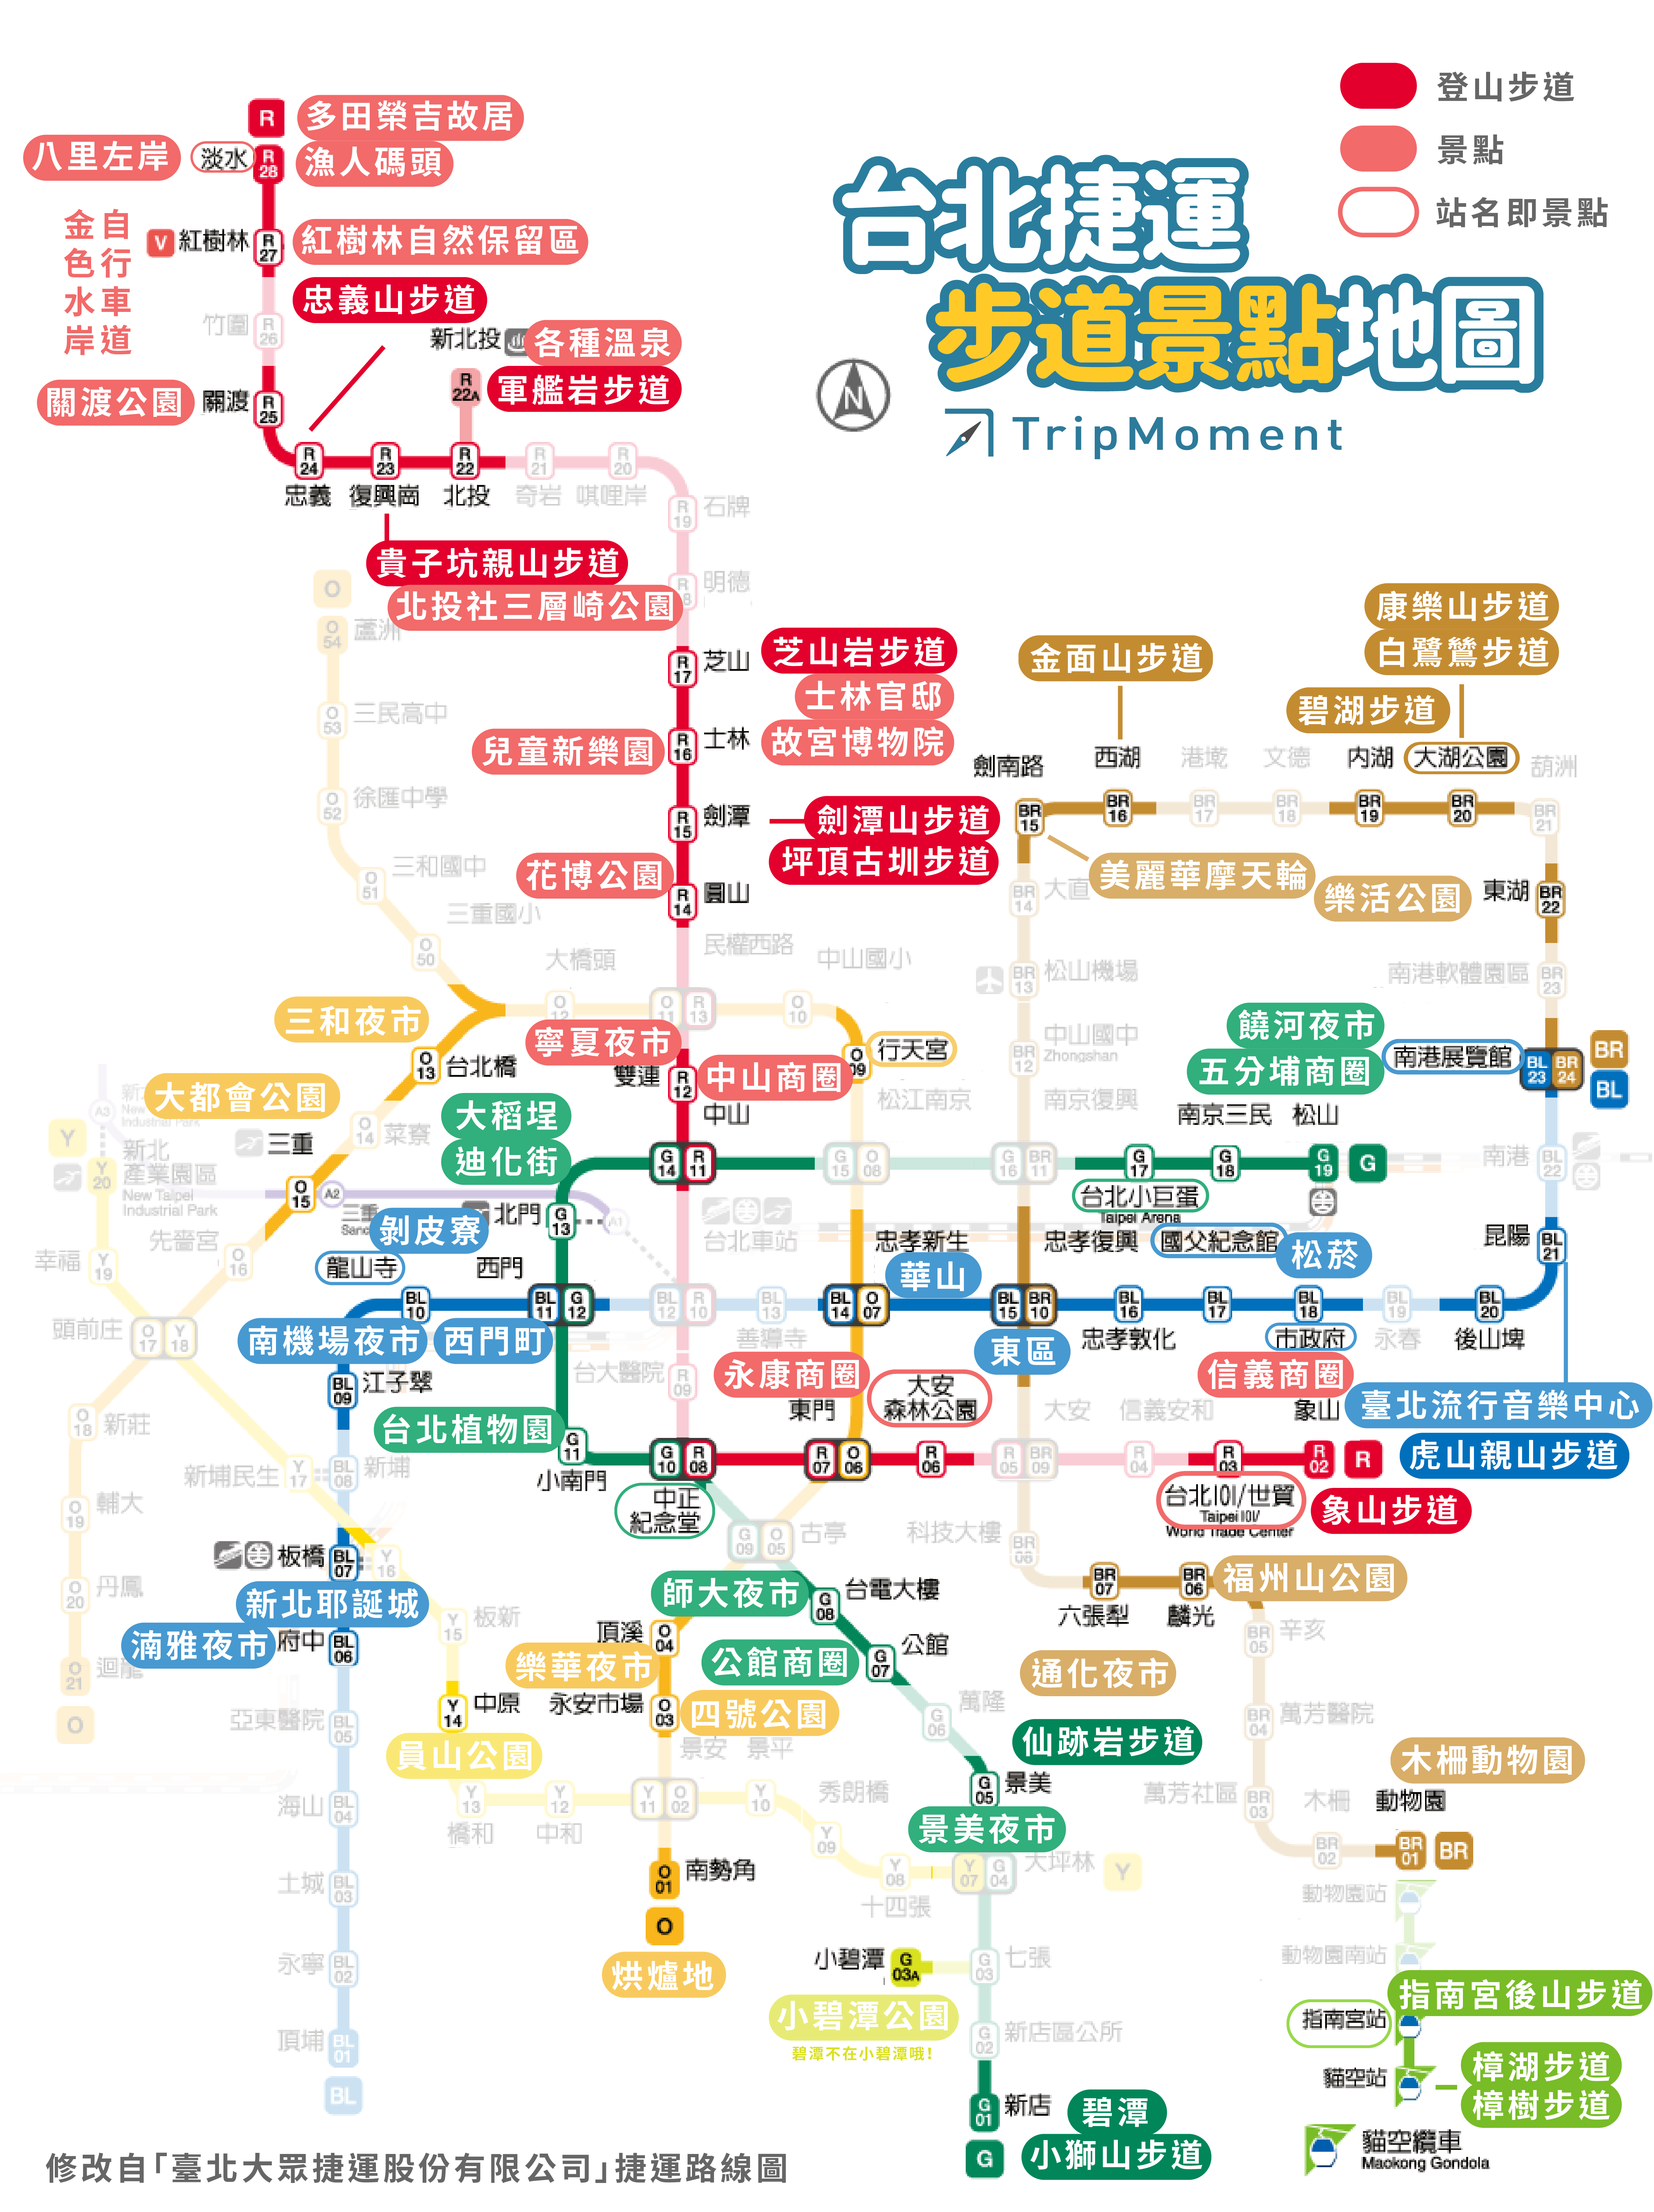 Template:台北捷運淡水信義線